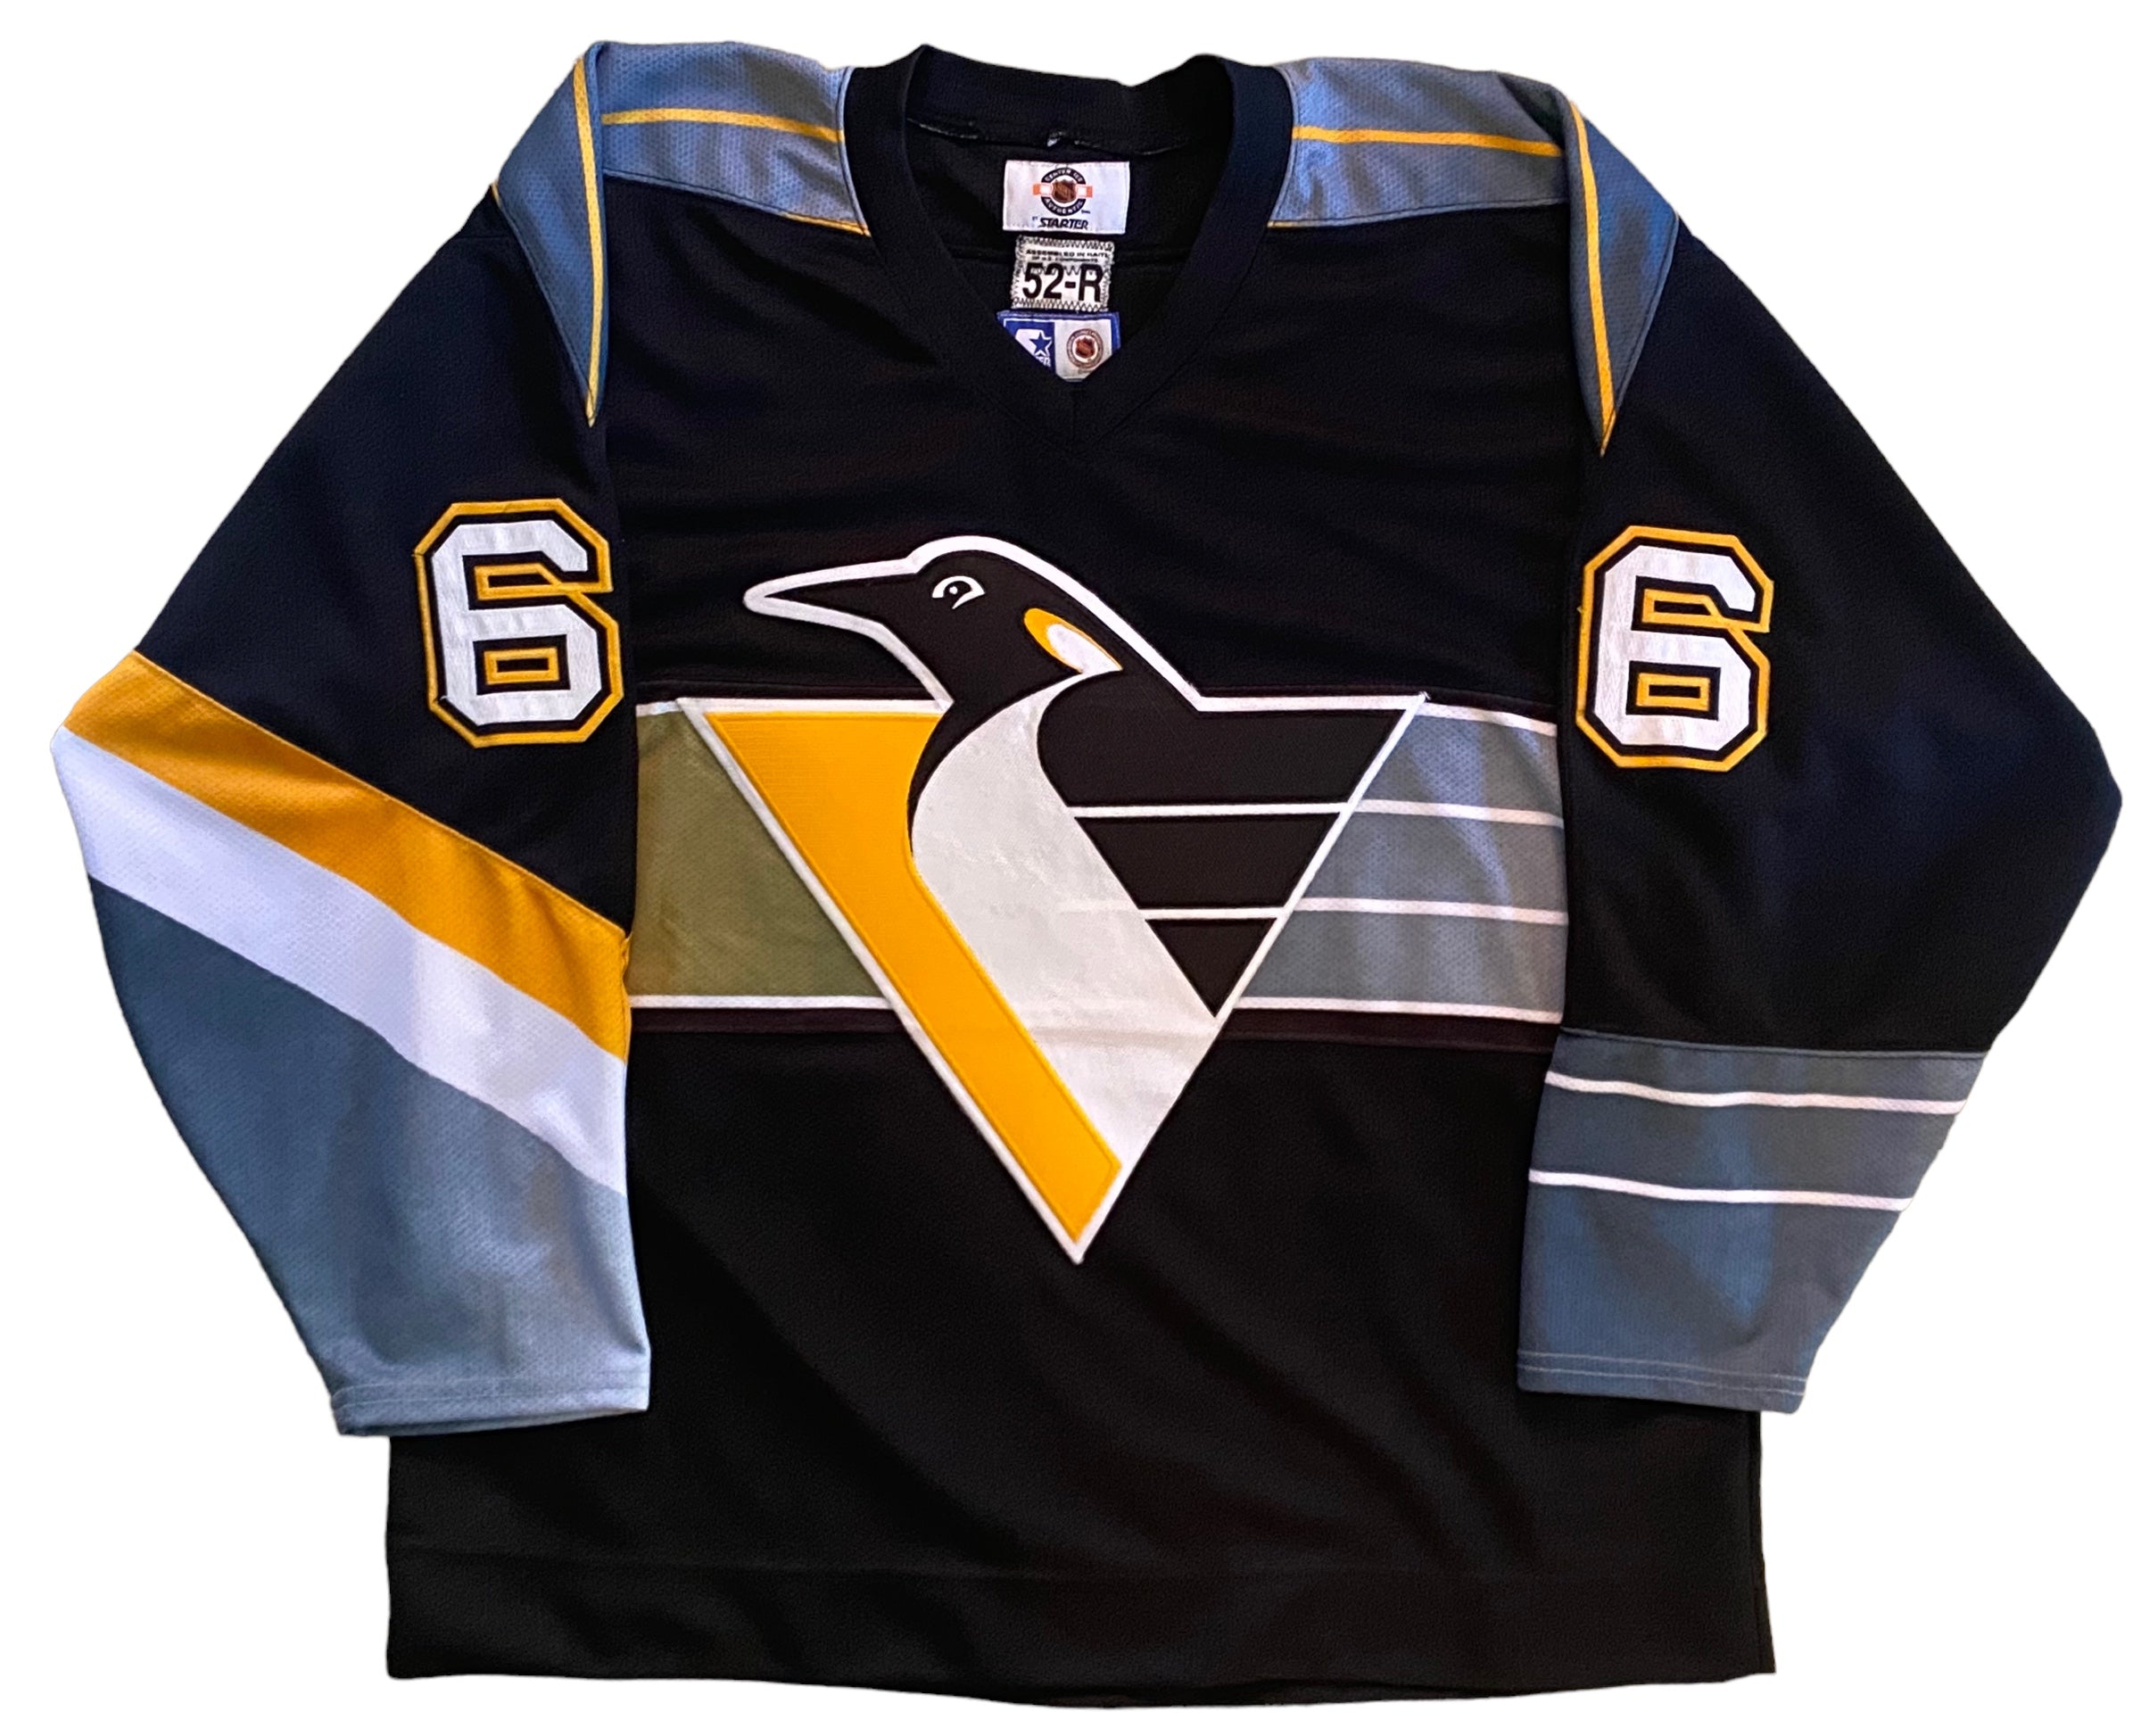 Mario Lemieux Pittsburgh Penguins Jerseys, Penguins Hockey Jerseys